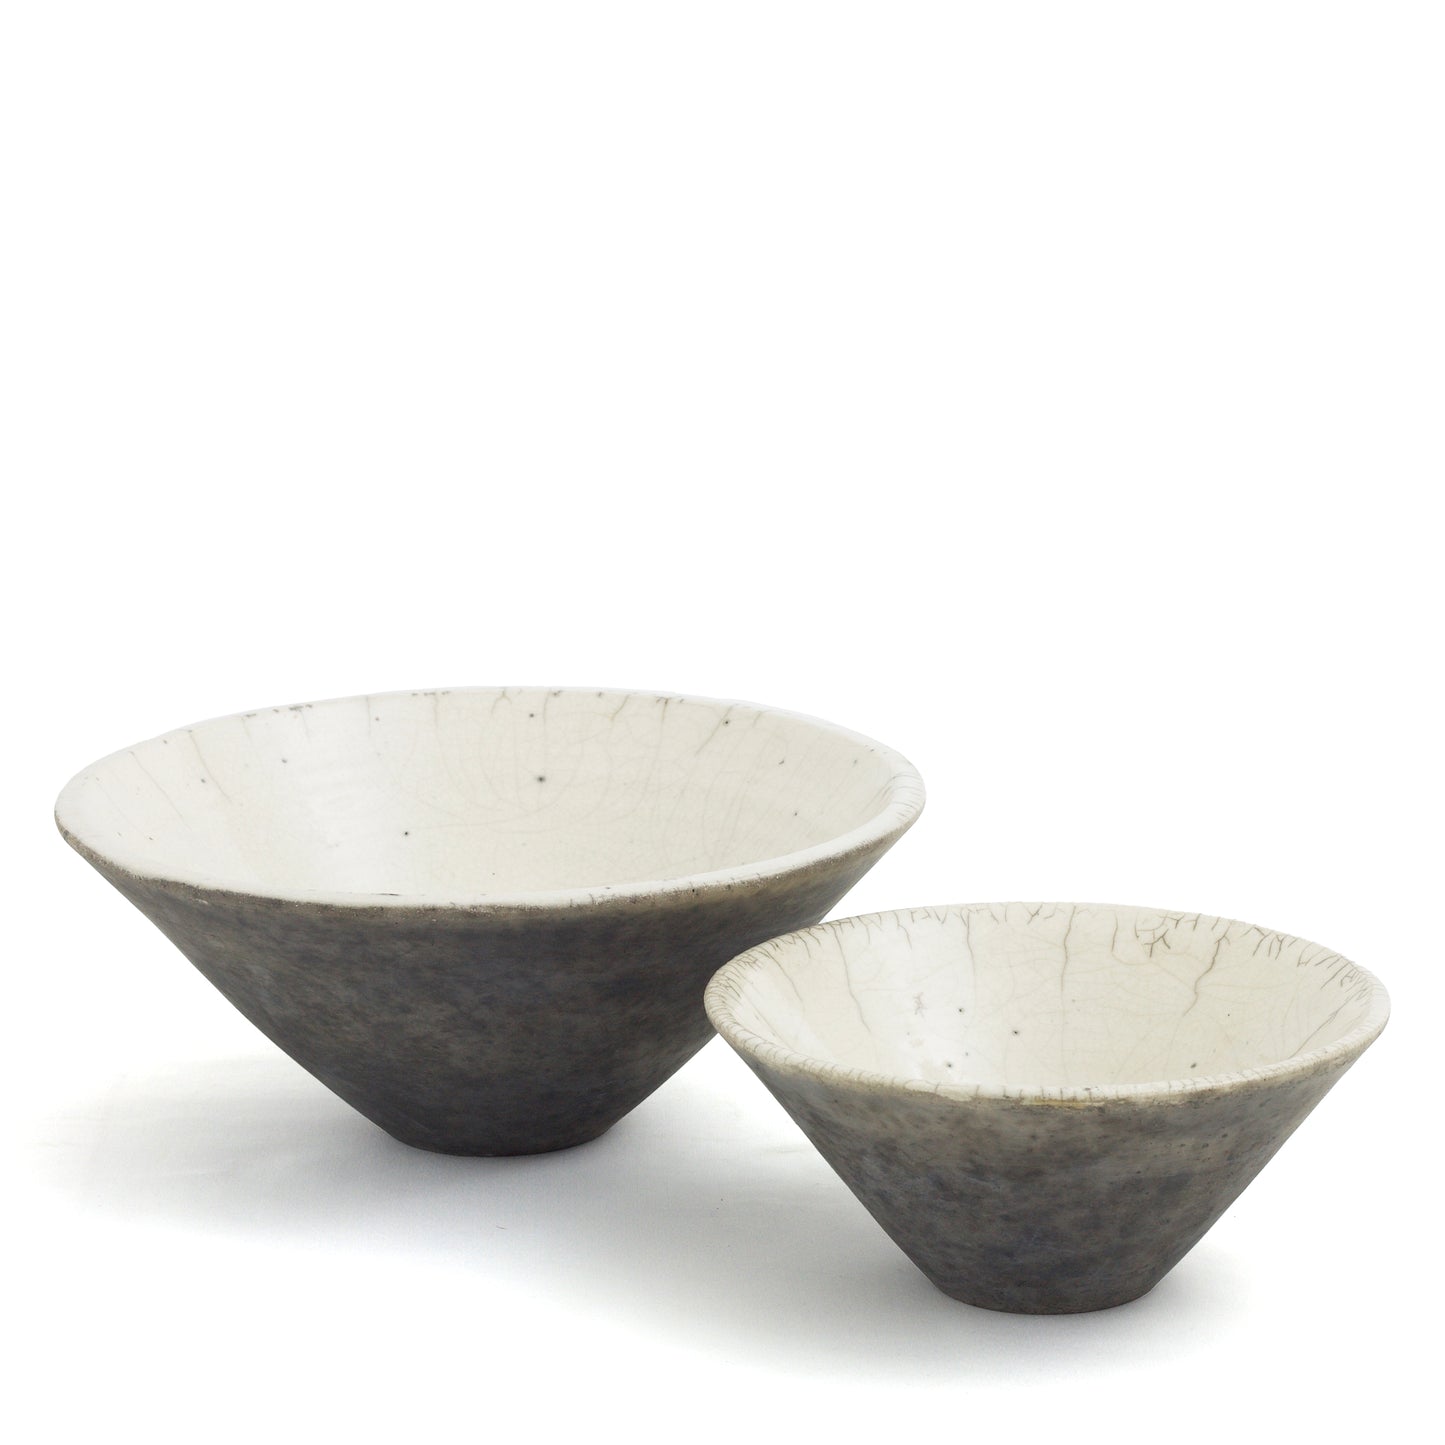 Japanese Modern Wu Set of 2 Bowls Raku Ceramics Crackle Black White